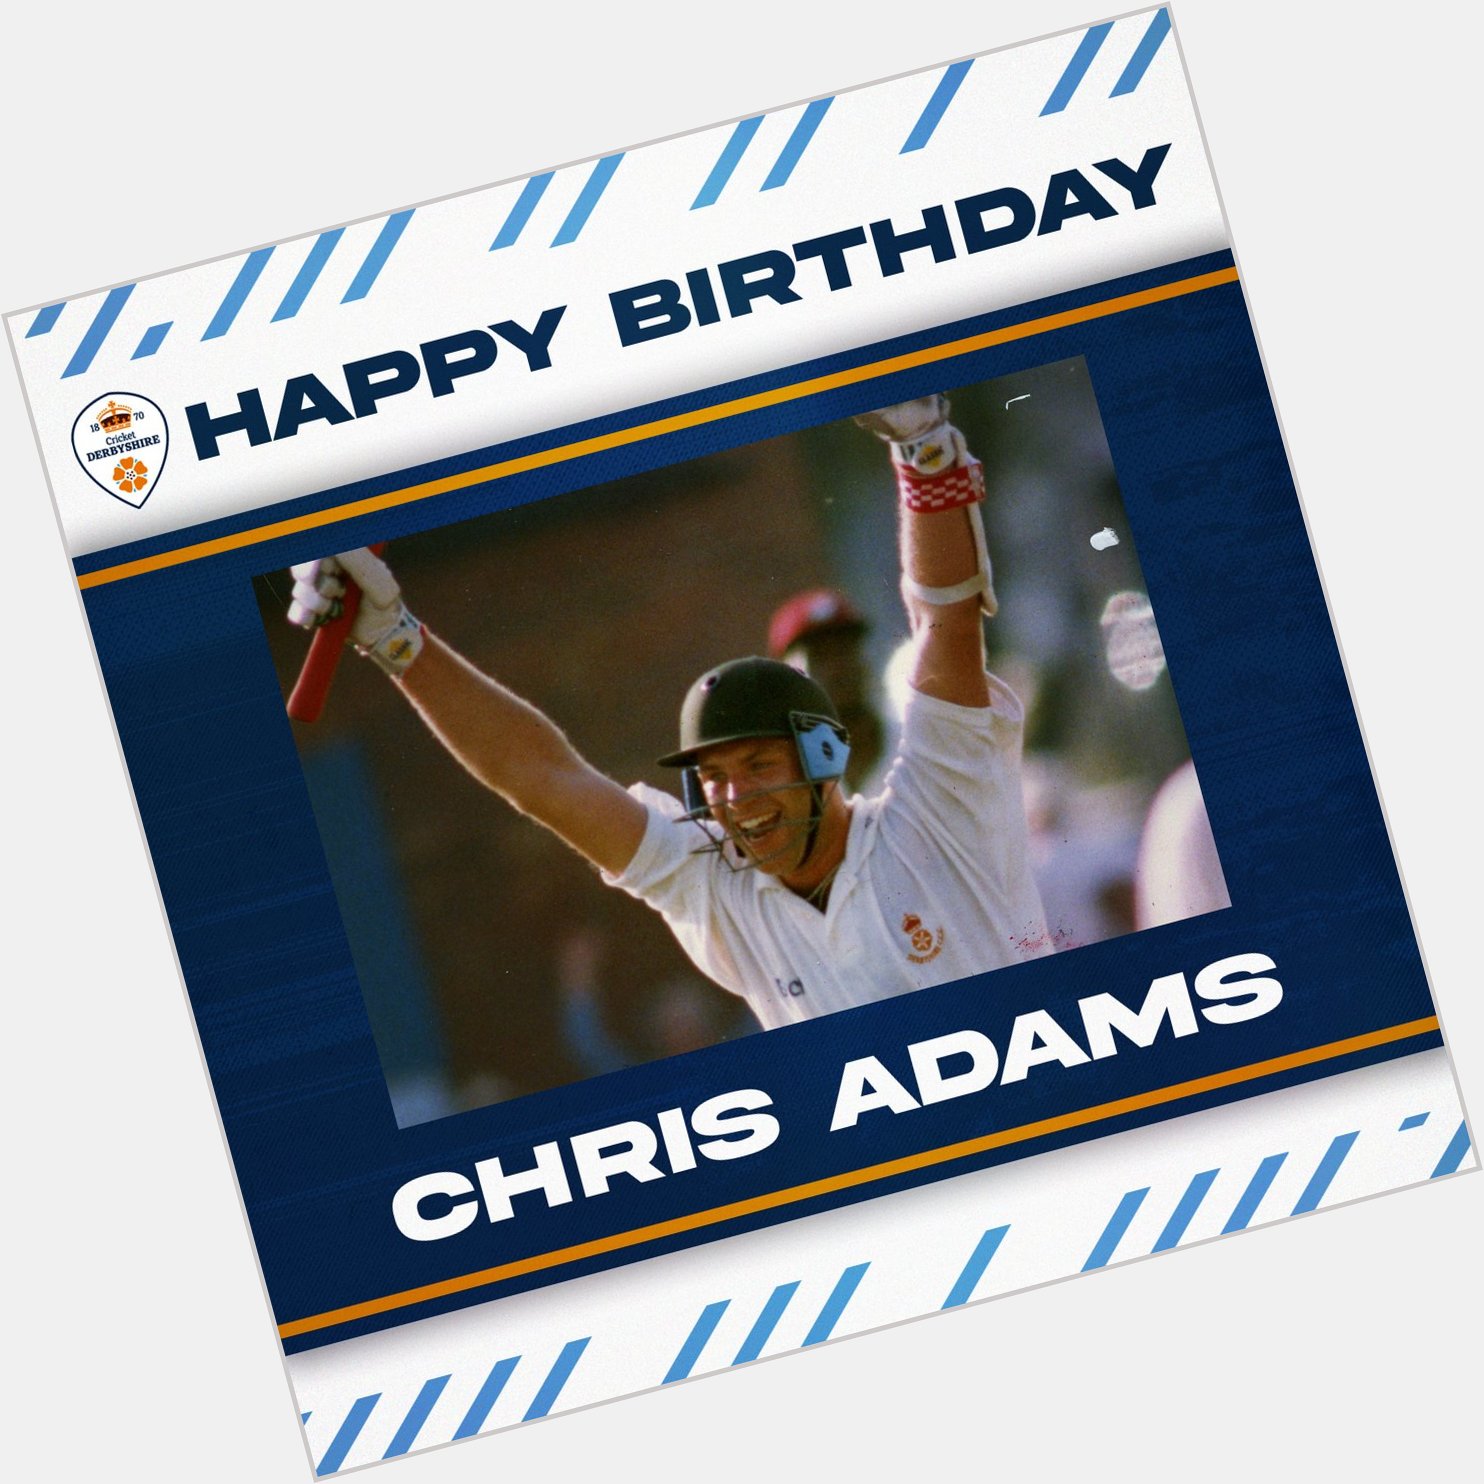 Happy birthday to great, Chris Adams!    